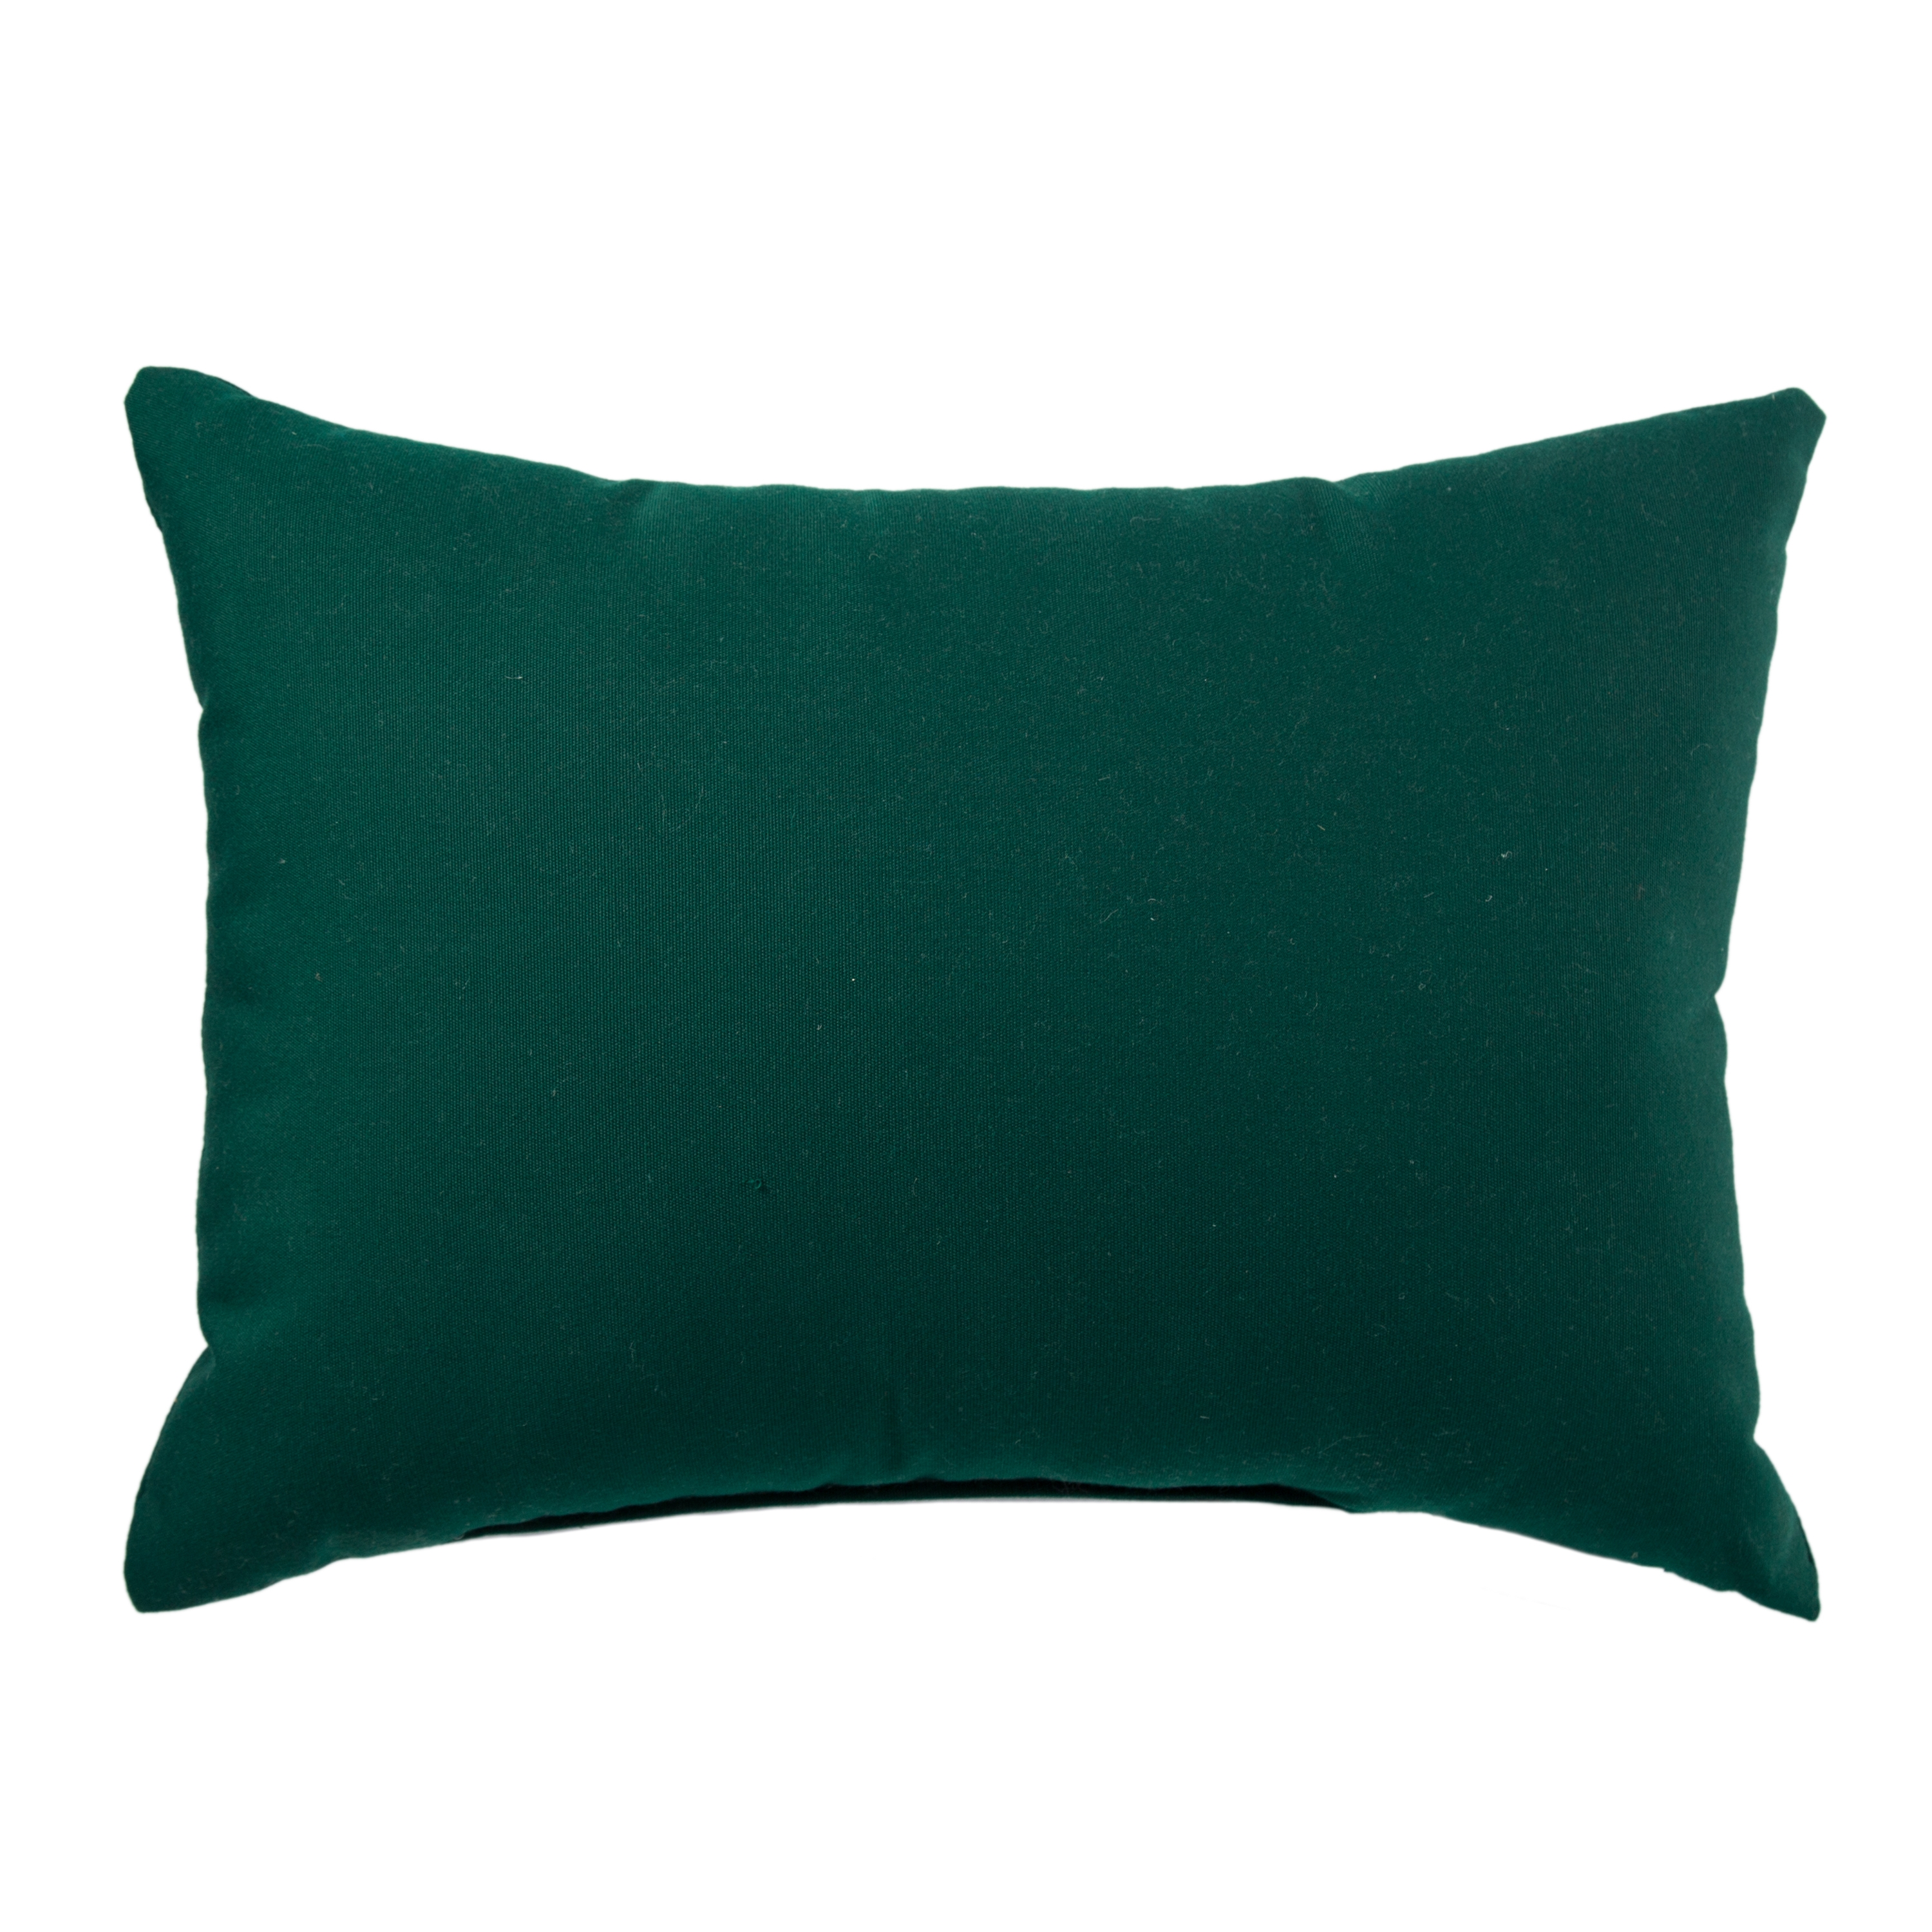 Design (US) Dark Green 13"X18" Pillow - Image 1